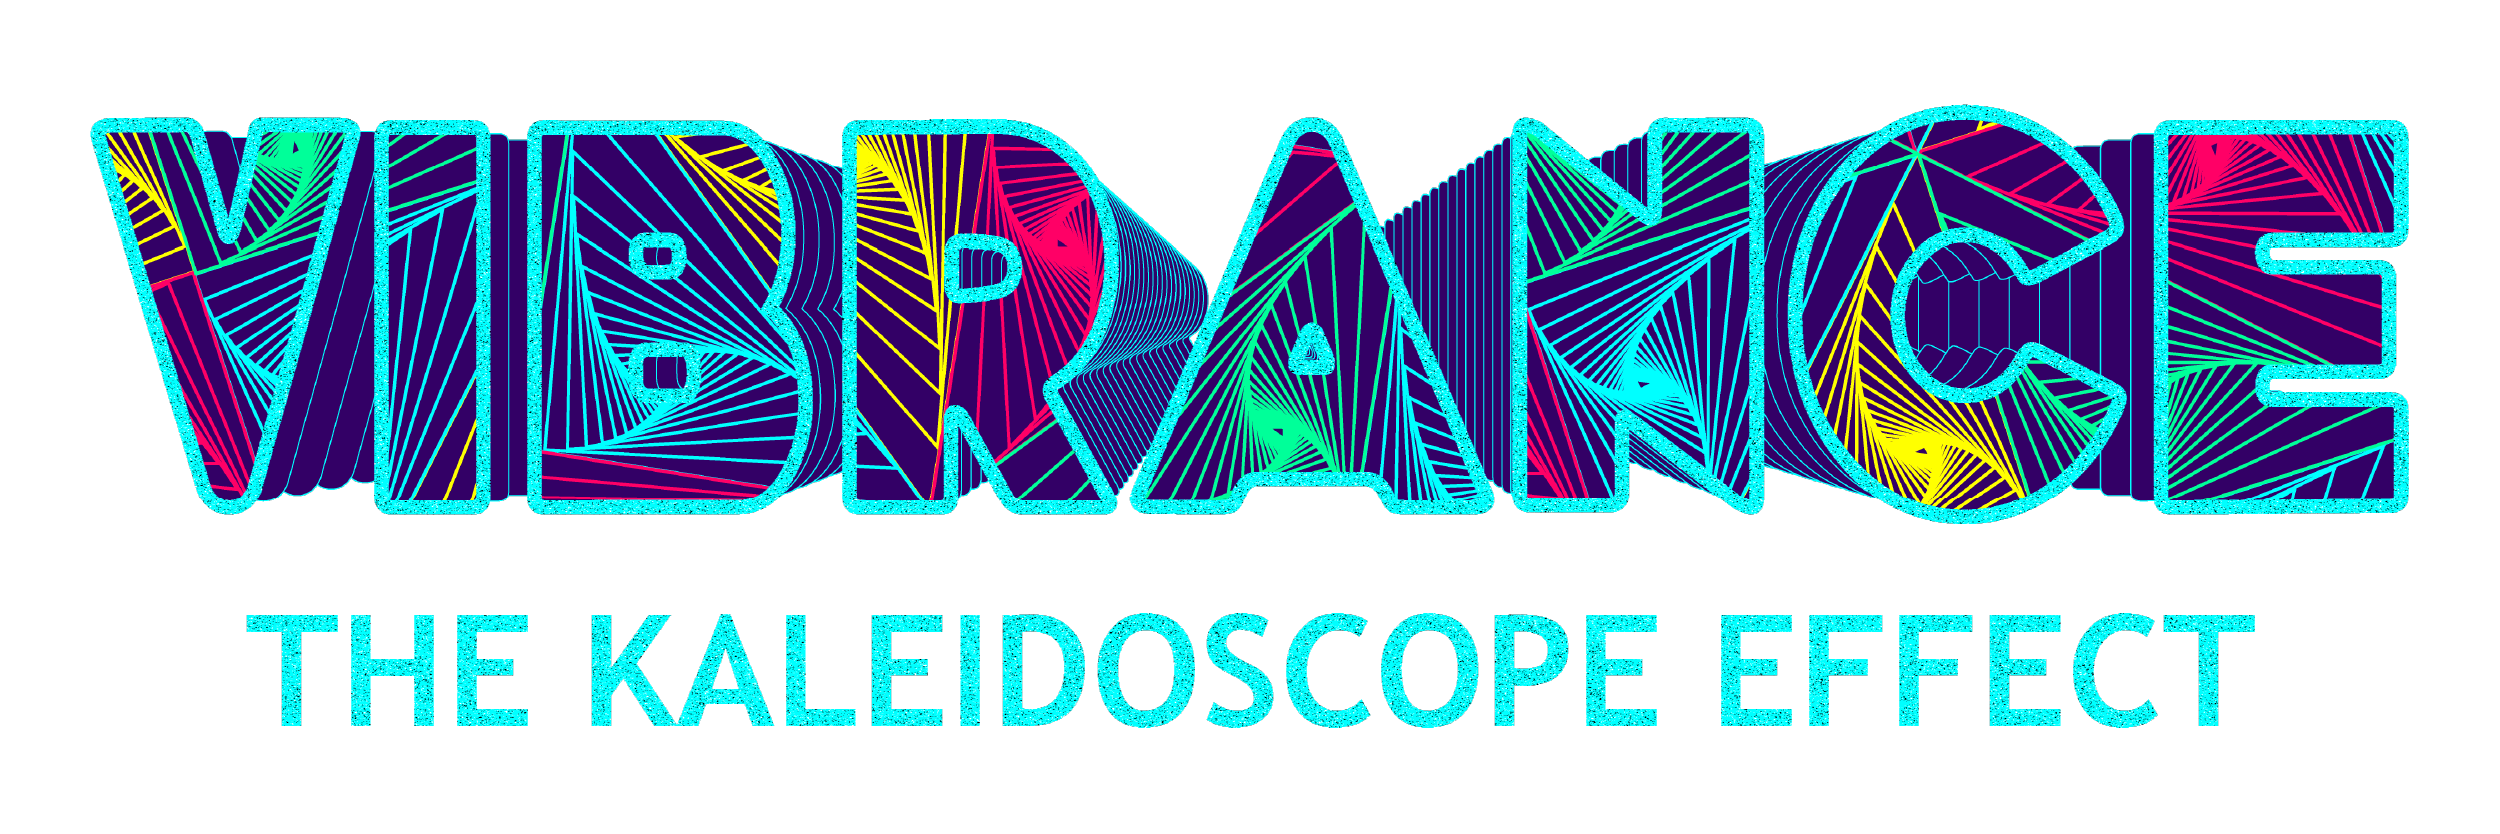 Vibrance - The Kaleidoscope Effect Logo